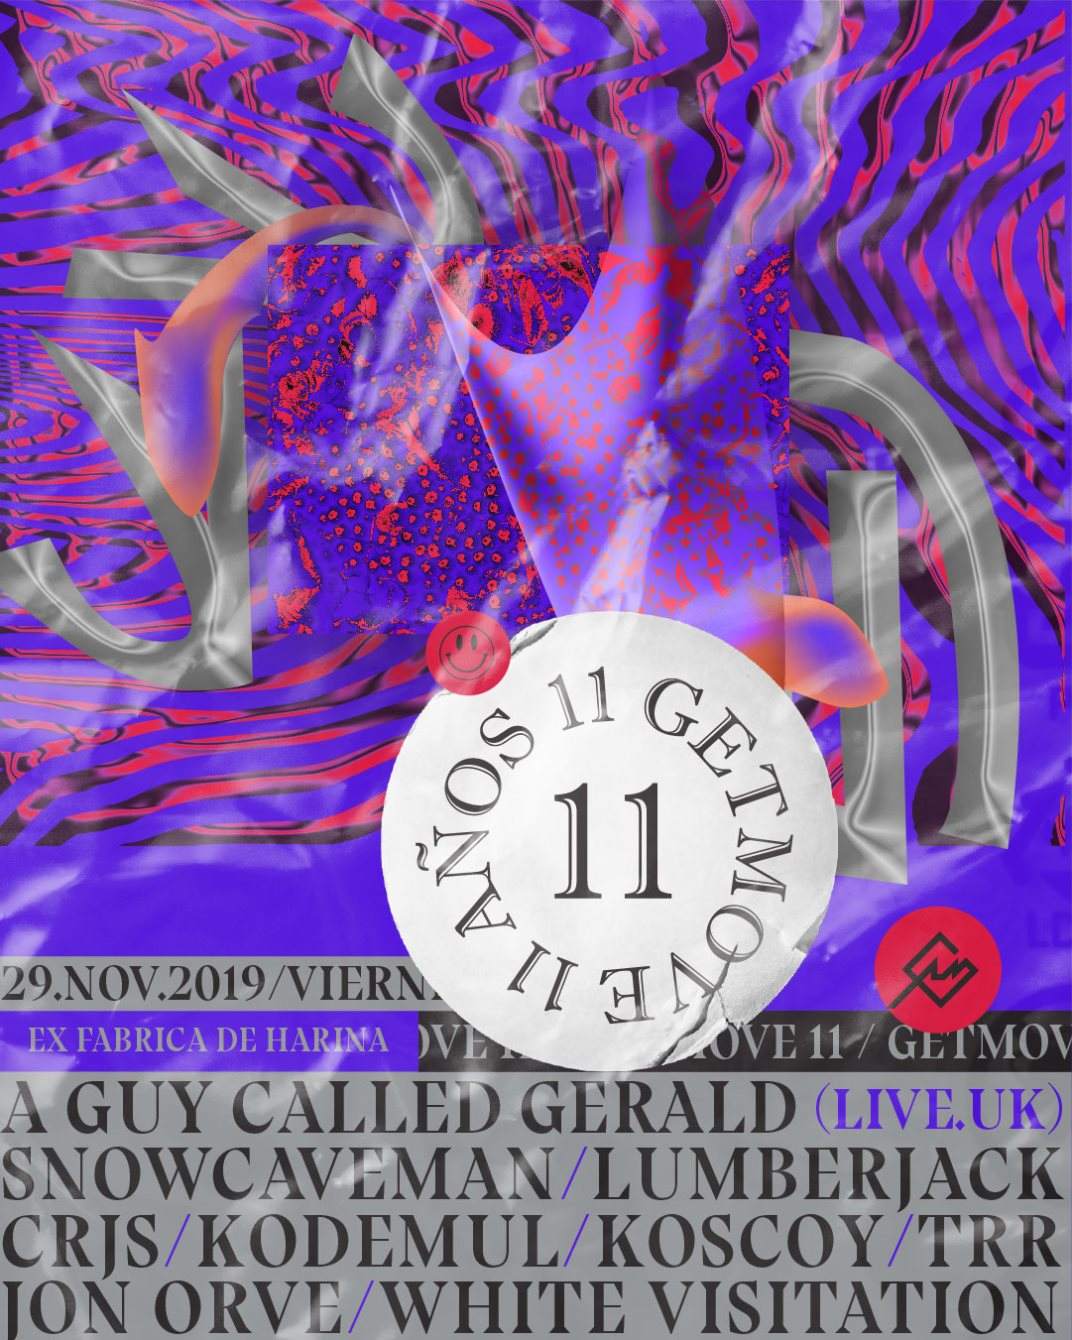 A Guy Called Gerald (Live.Uk) - GetMove Anniversary - Página frontal